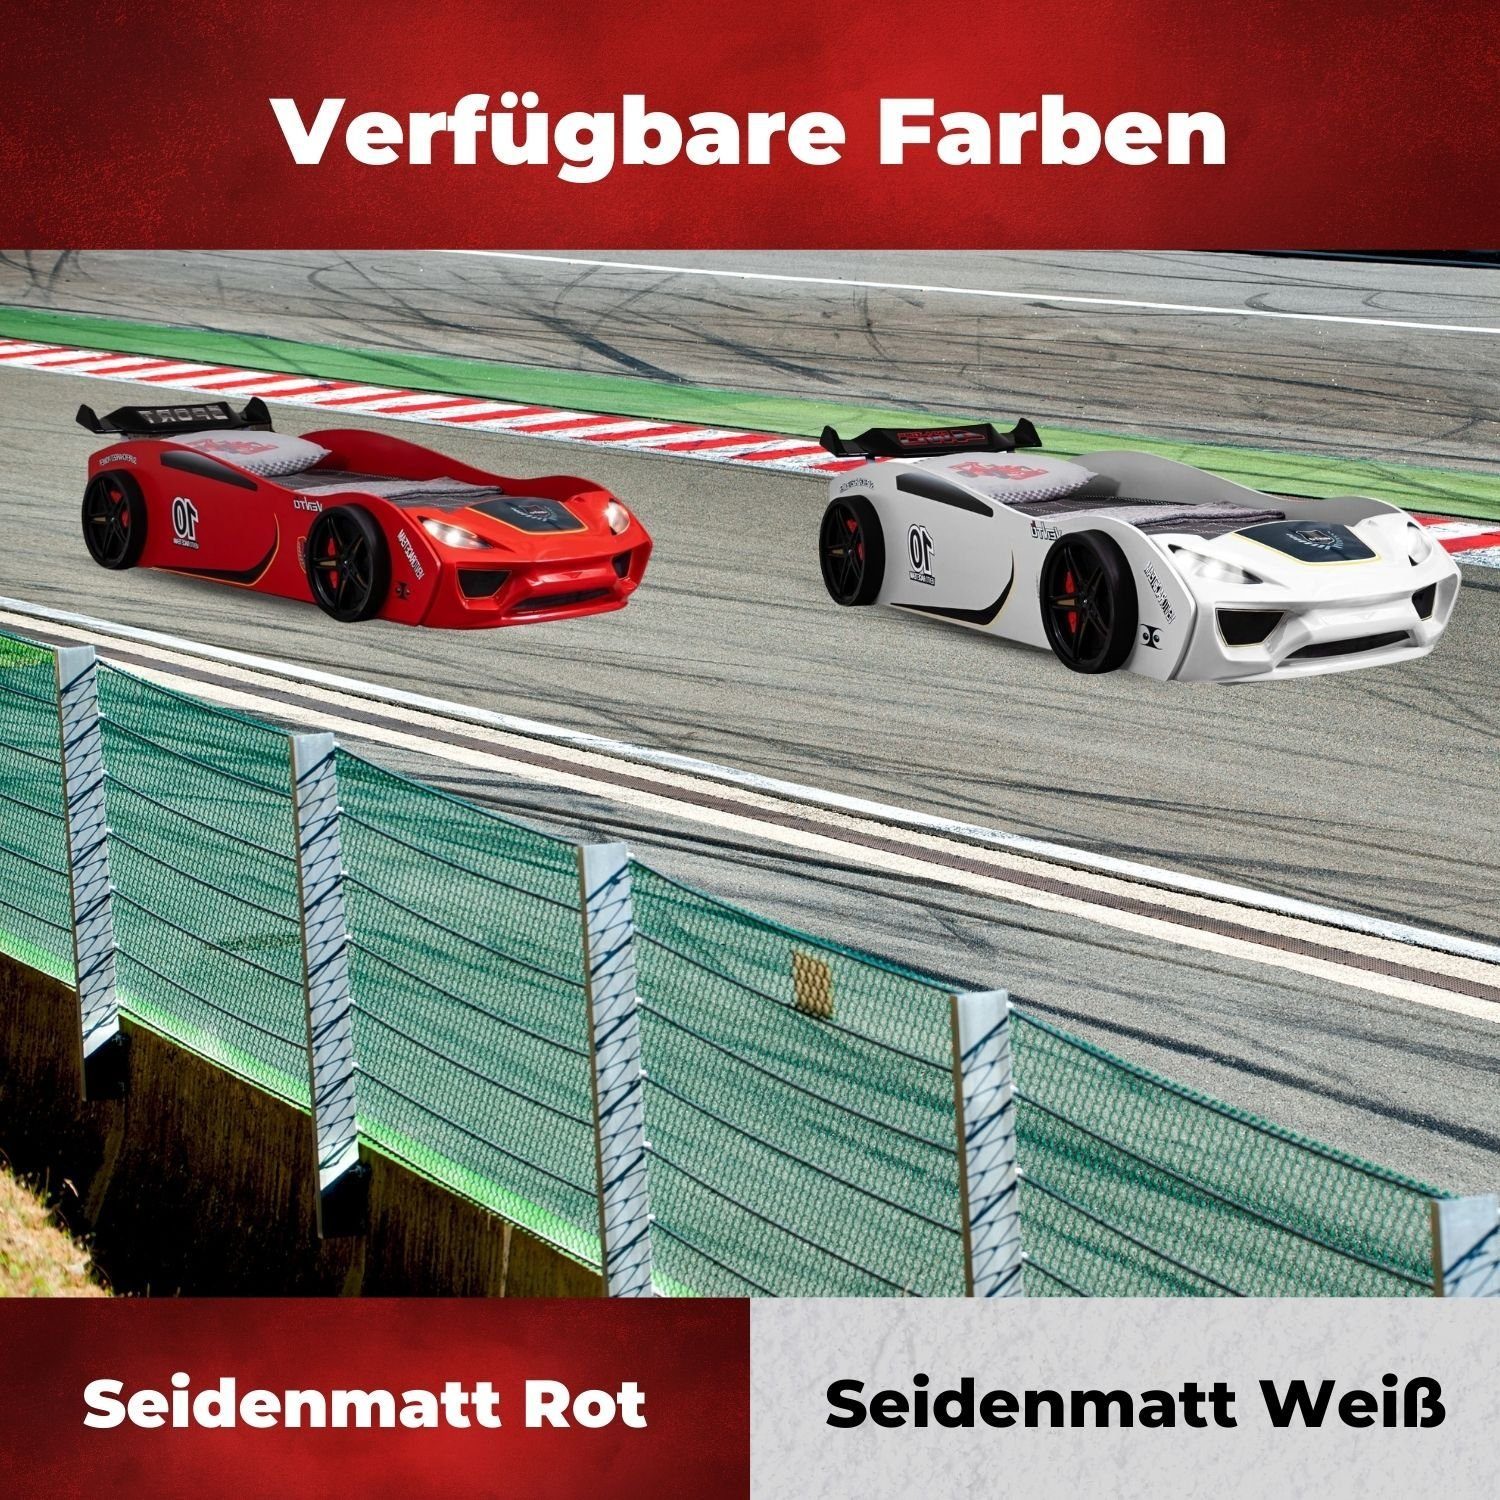 Coemo Spoiler), Renn-Design 90x200 DREAM mit RACER Rot Autobett (Kinderbett Lattenrost Rot mit |